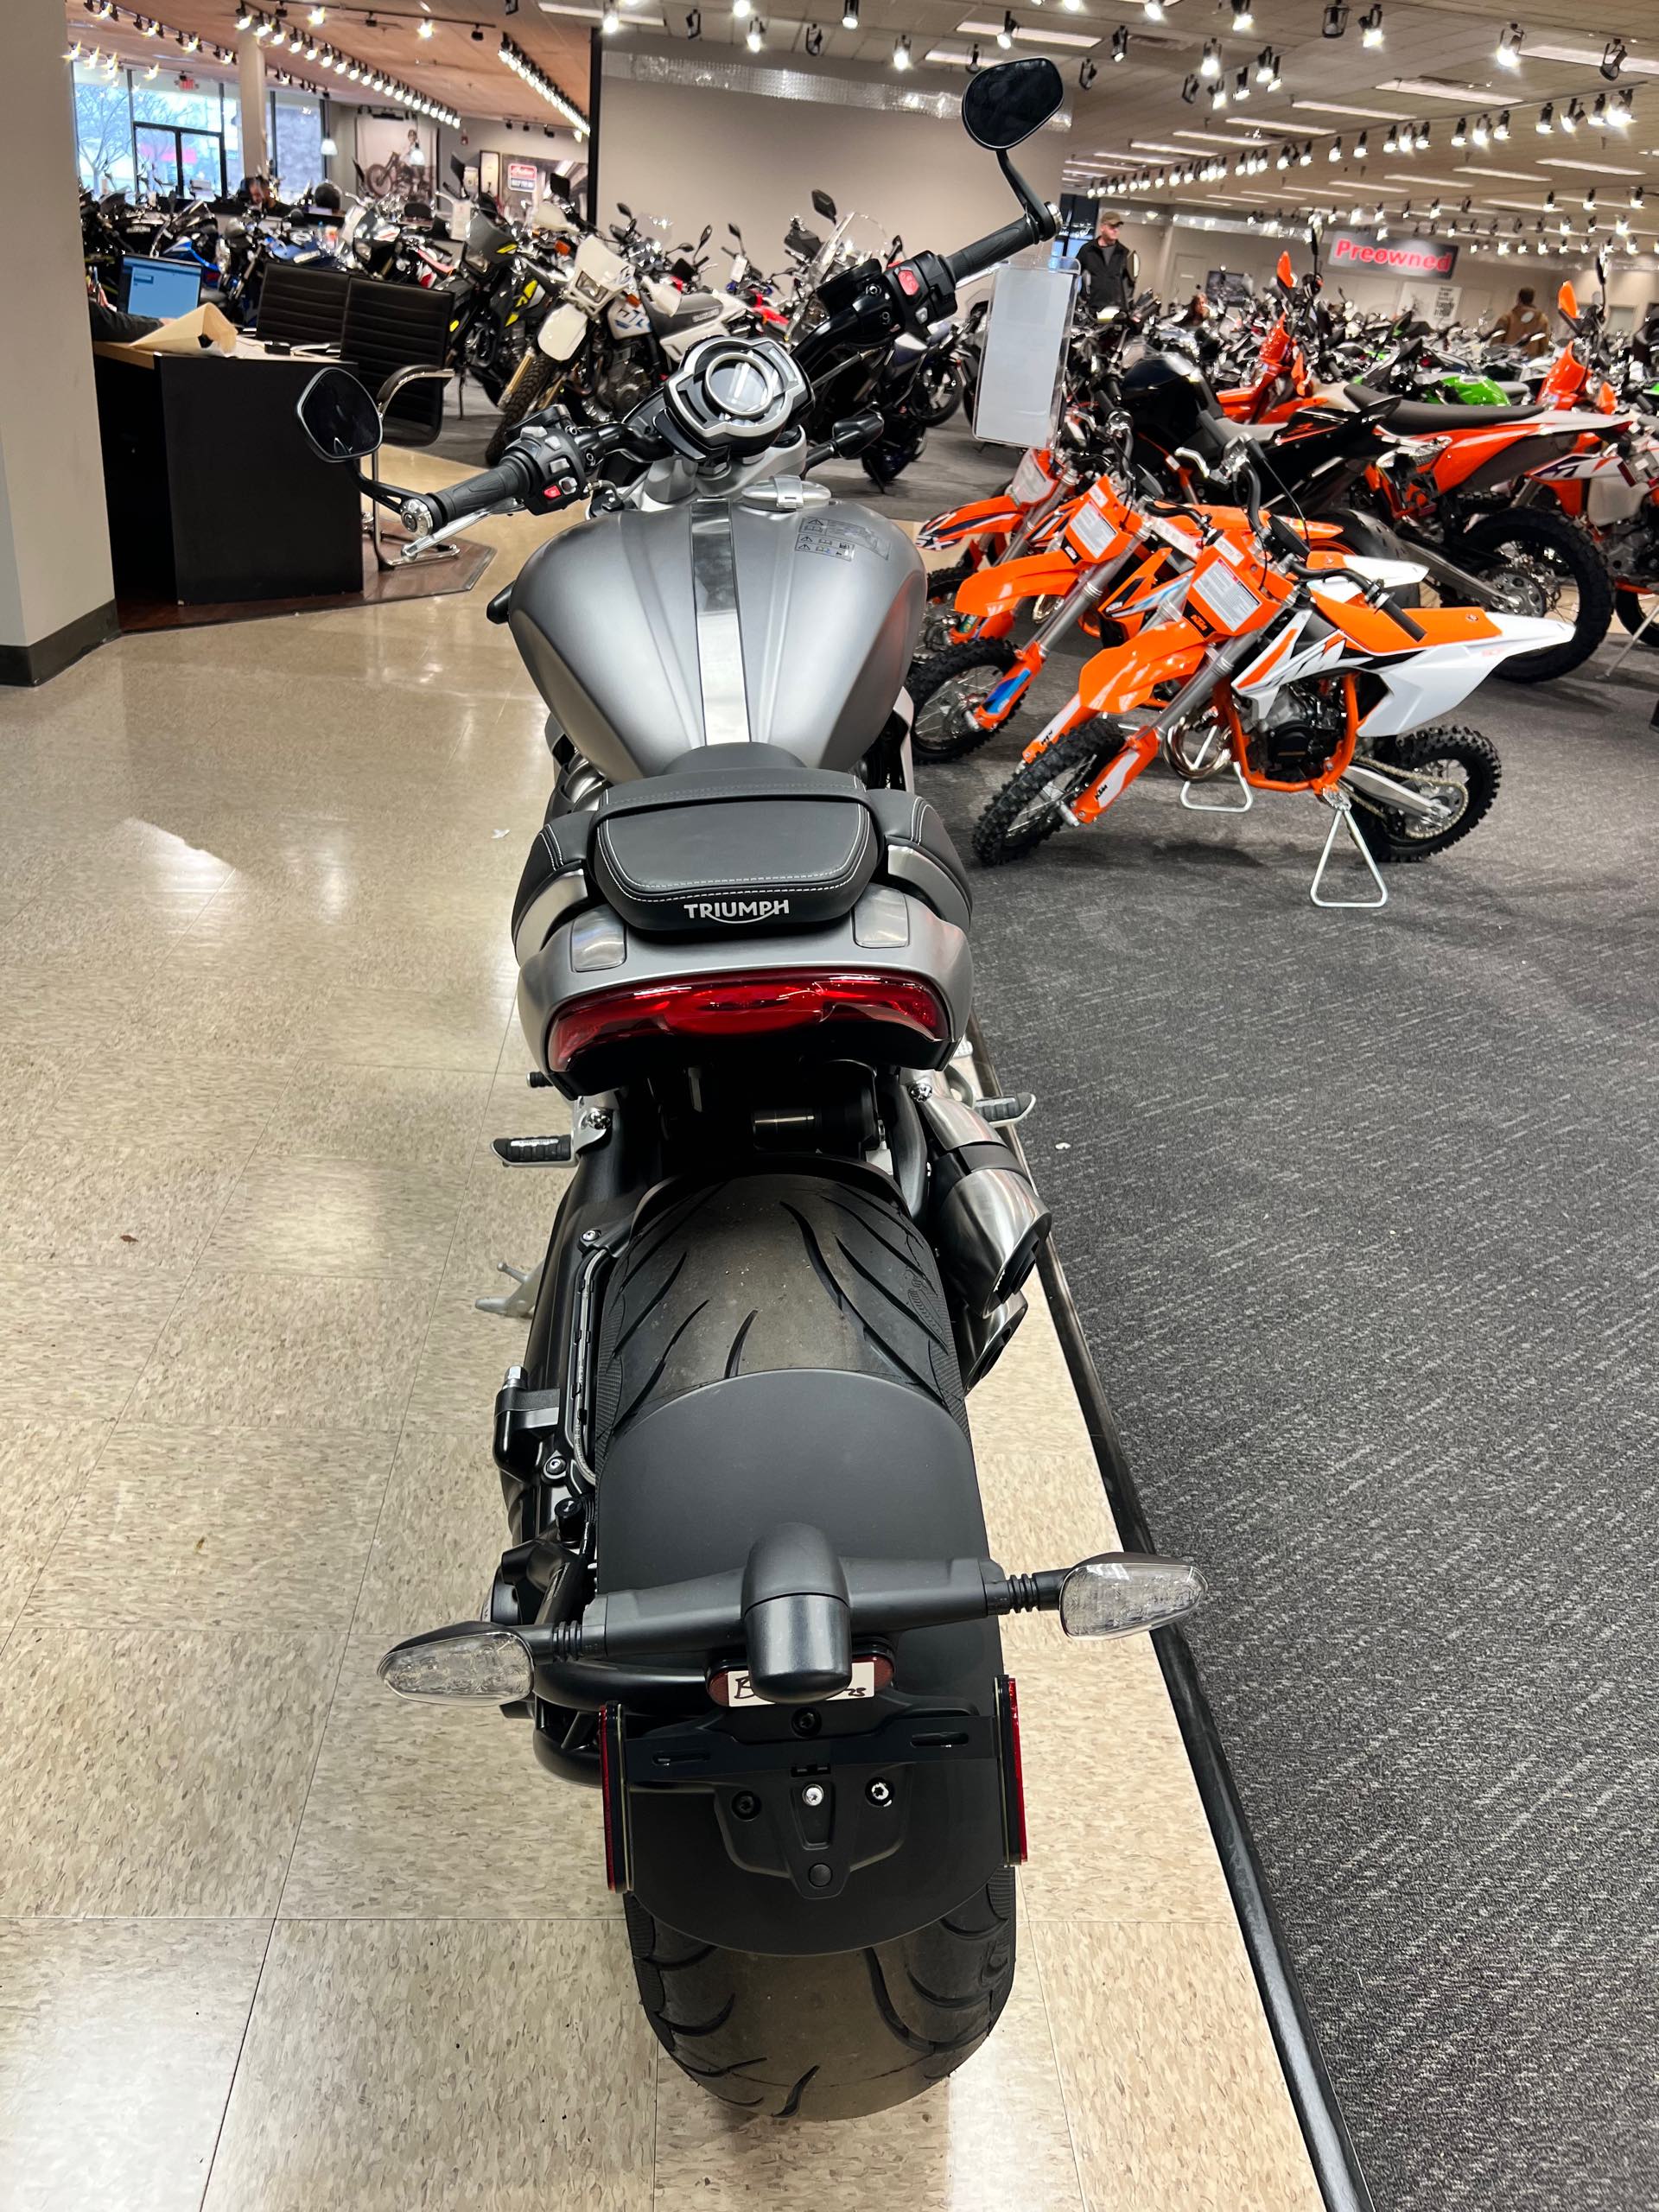 2023 Triumph Rocket 3 R at Sloans Motorcycle ATV, Murfreesboro, TN, 37129